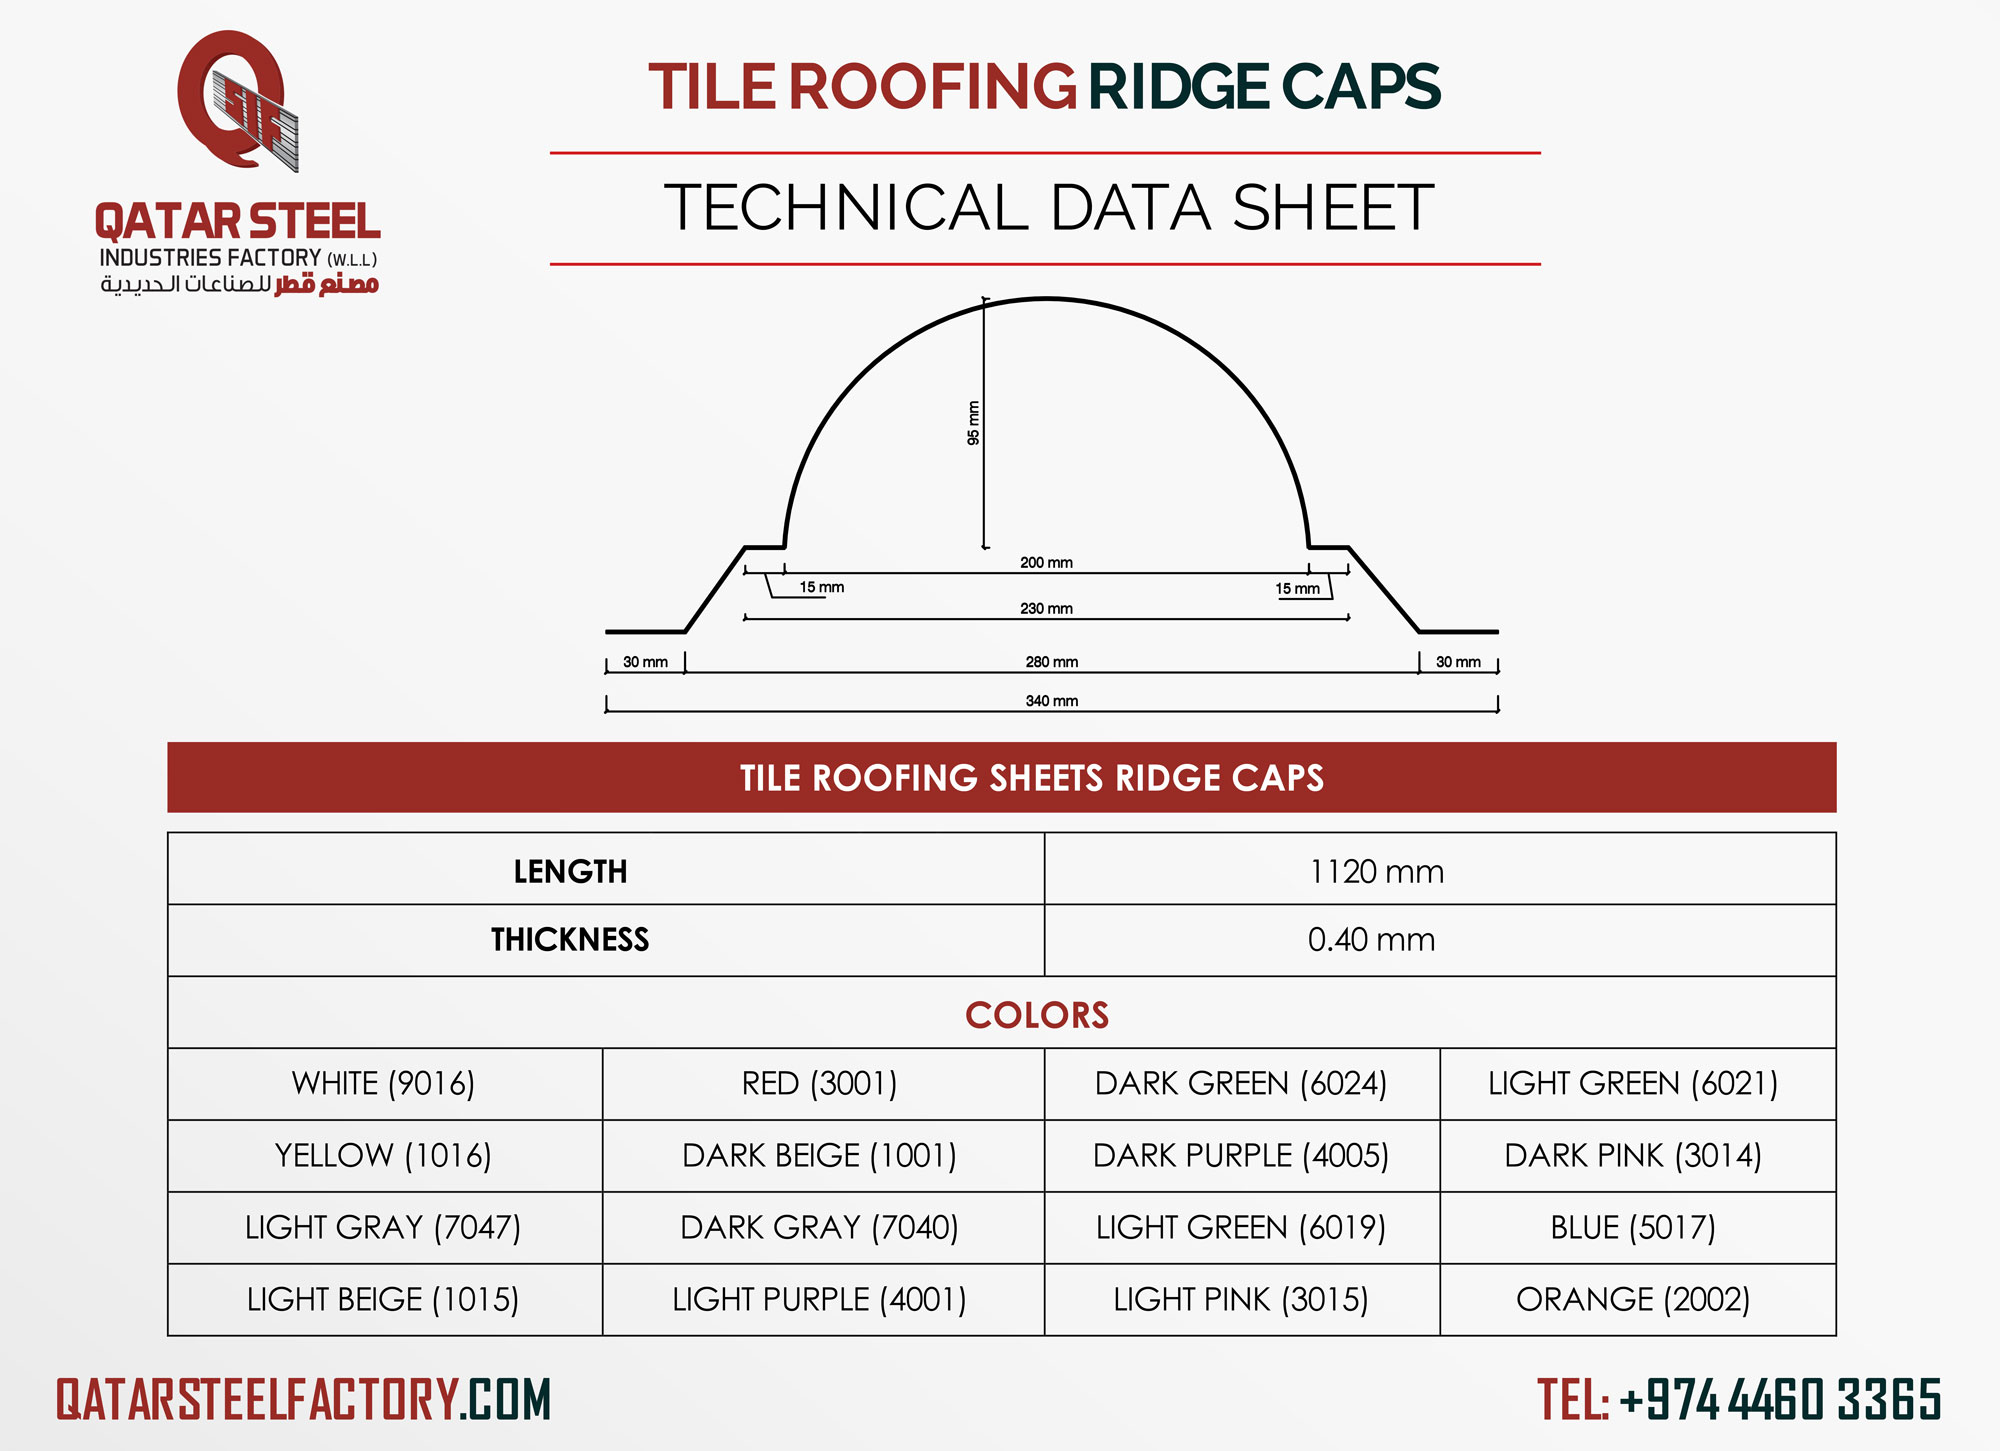 Roll Top Ridge Cap For Metal Roofing